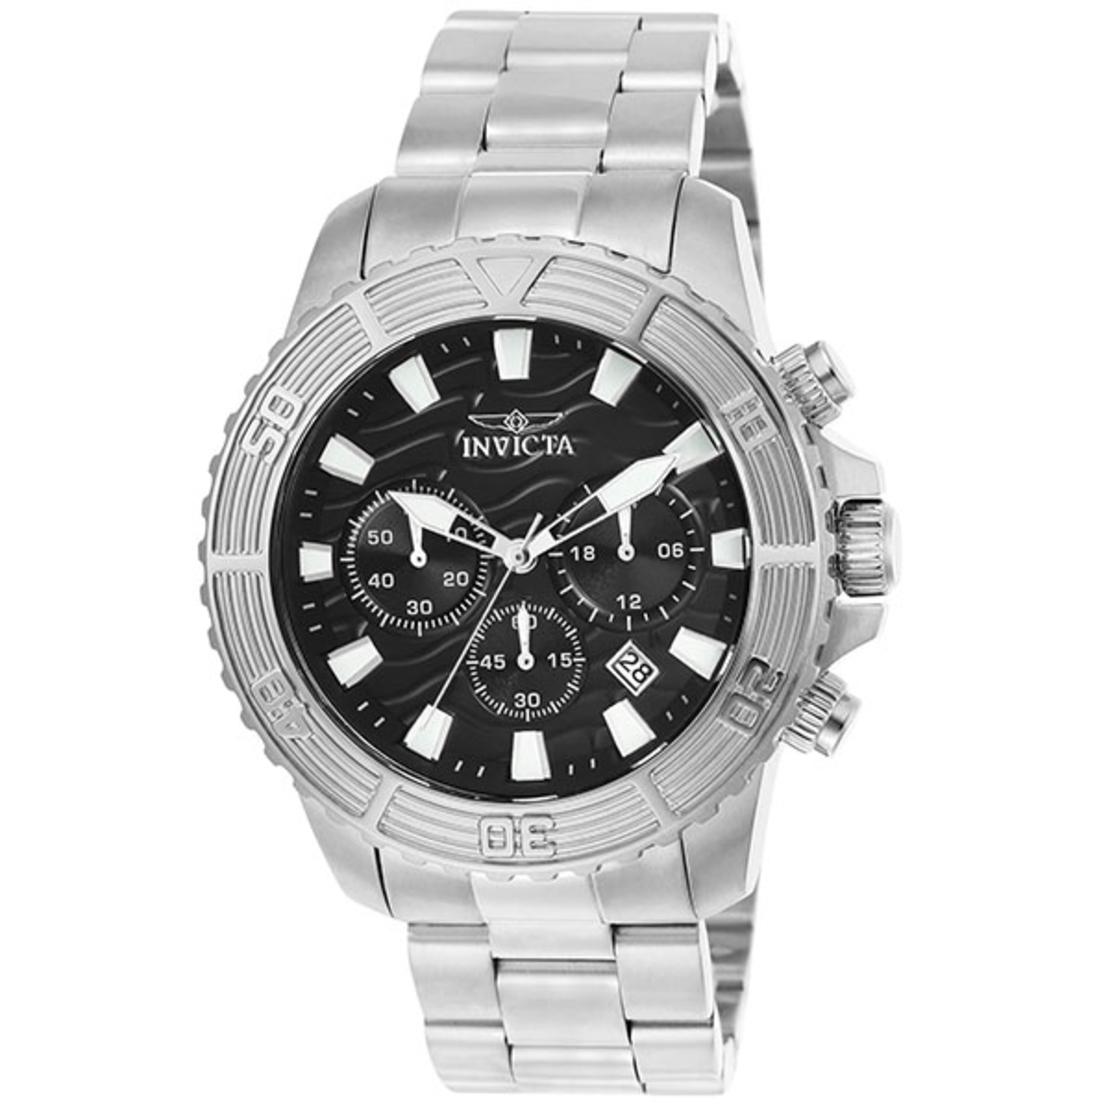 שעון Invicta Pro Diver לגבר דגם 23998